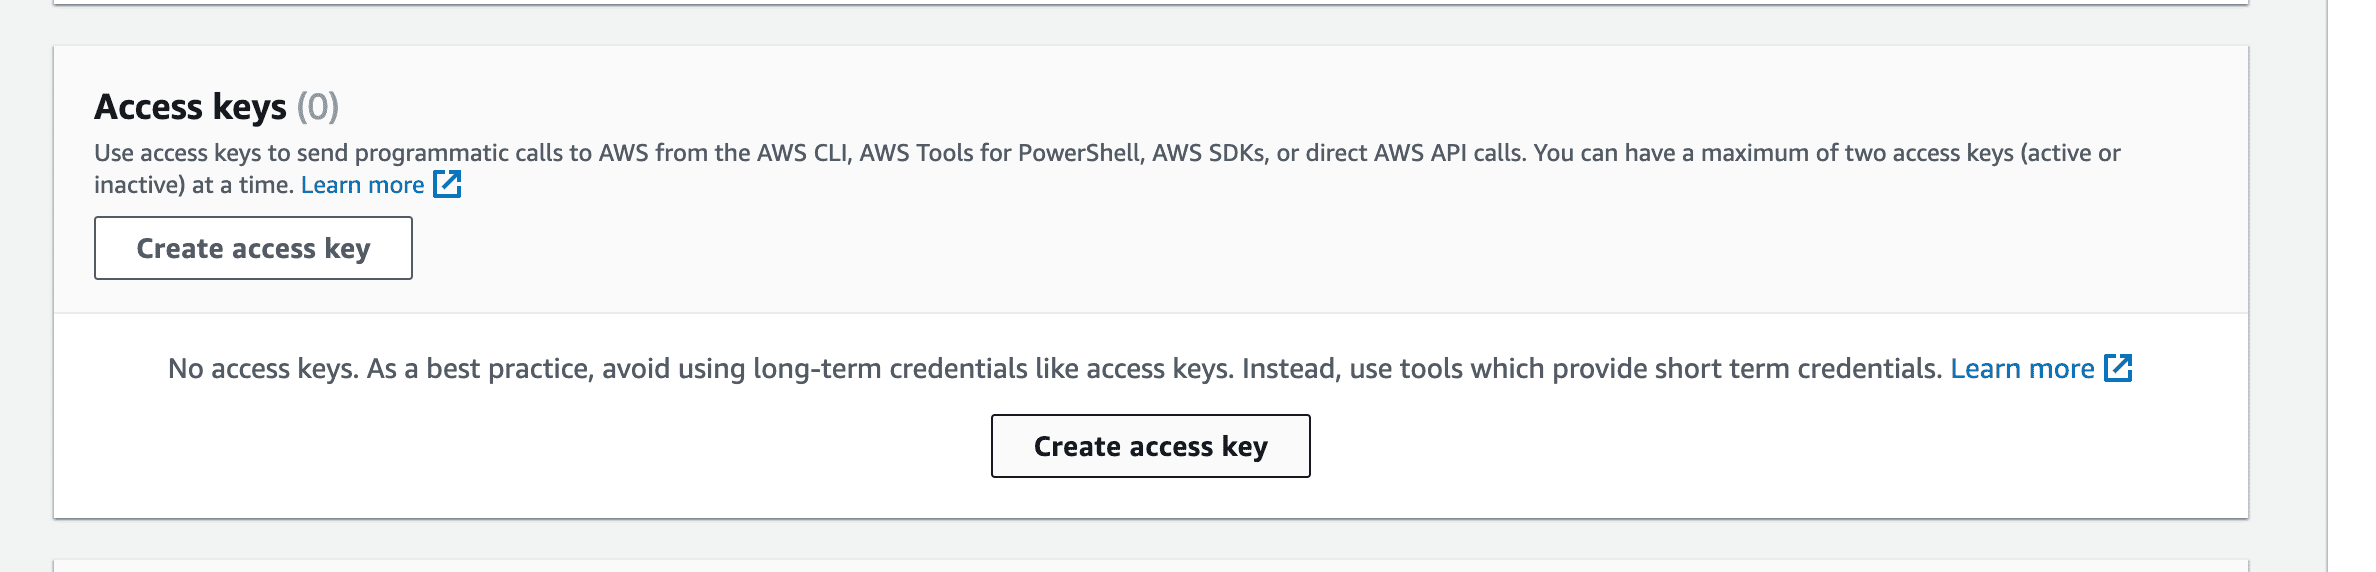 AWS create access key